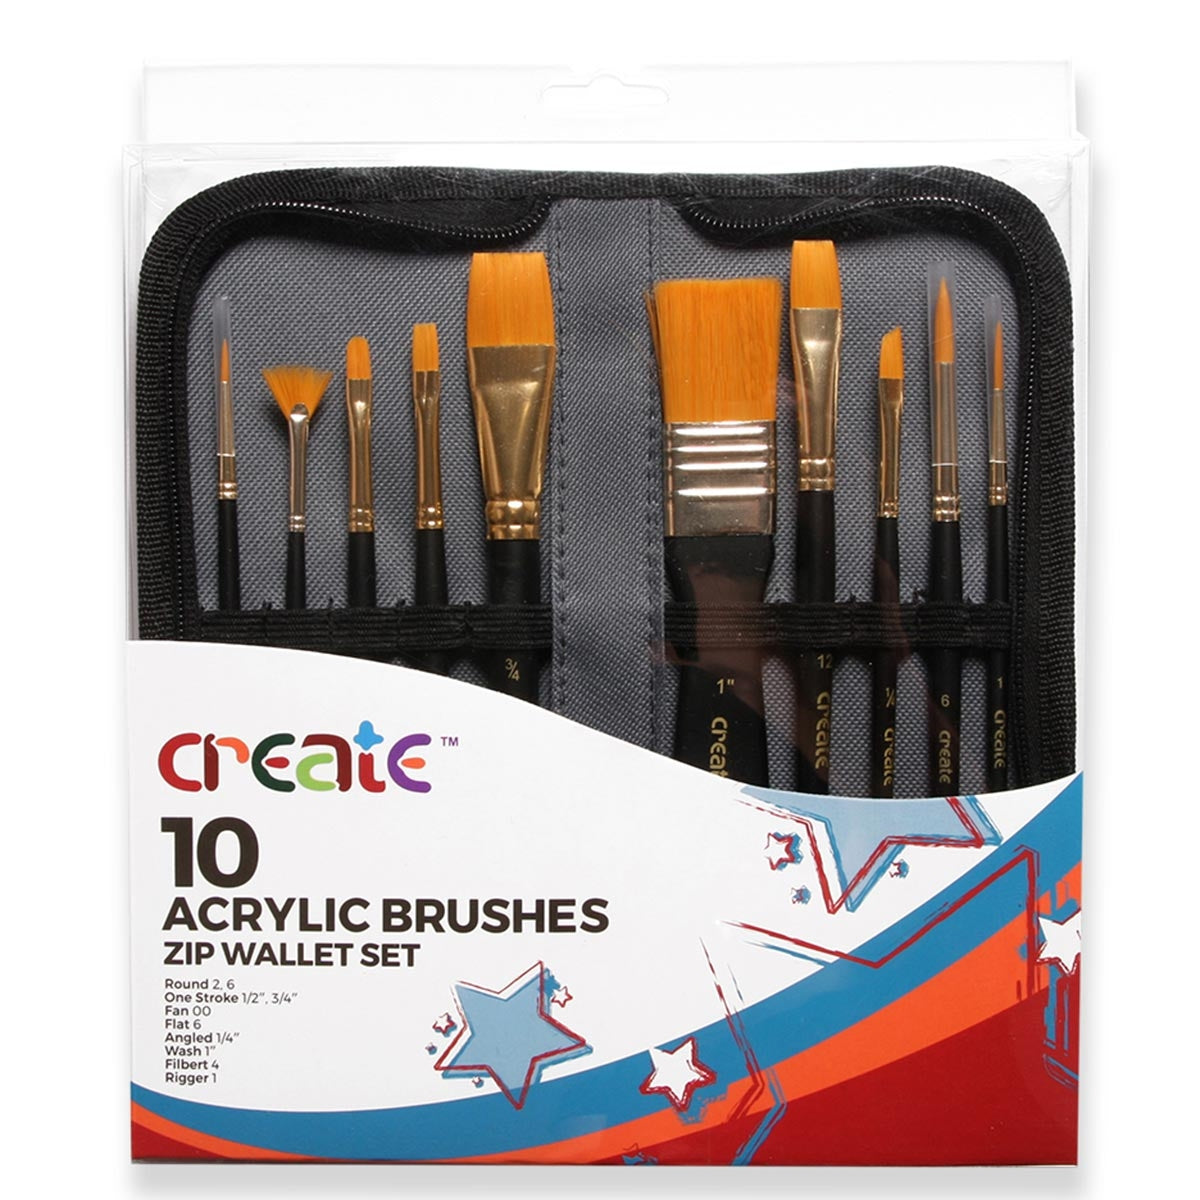 Create - 10 Acrylic Brush Set with Zip Wallet